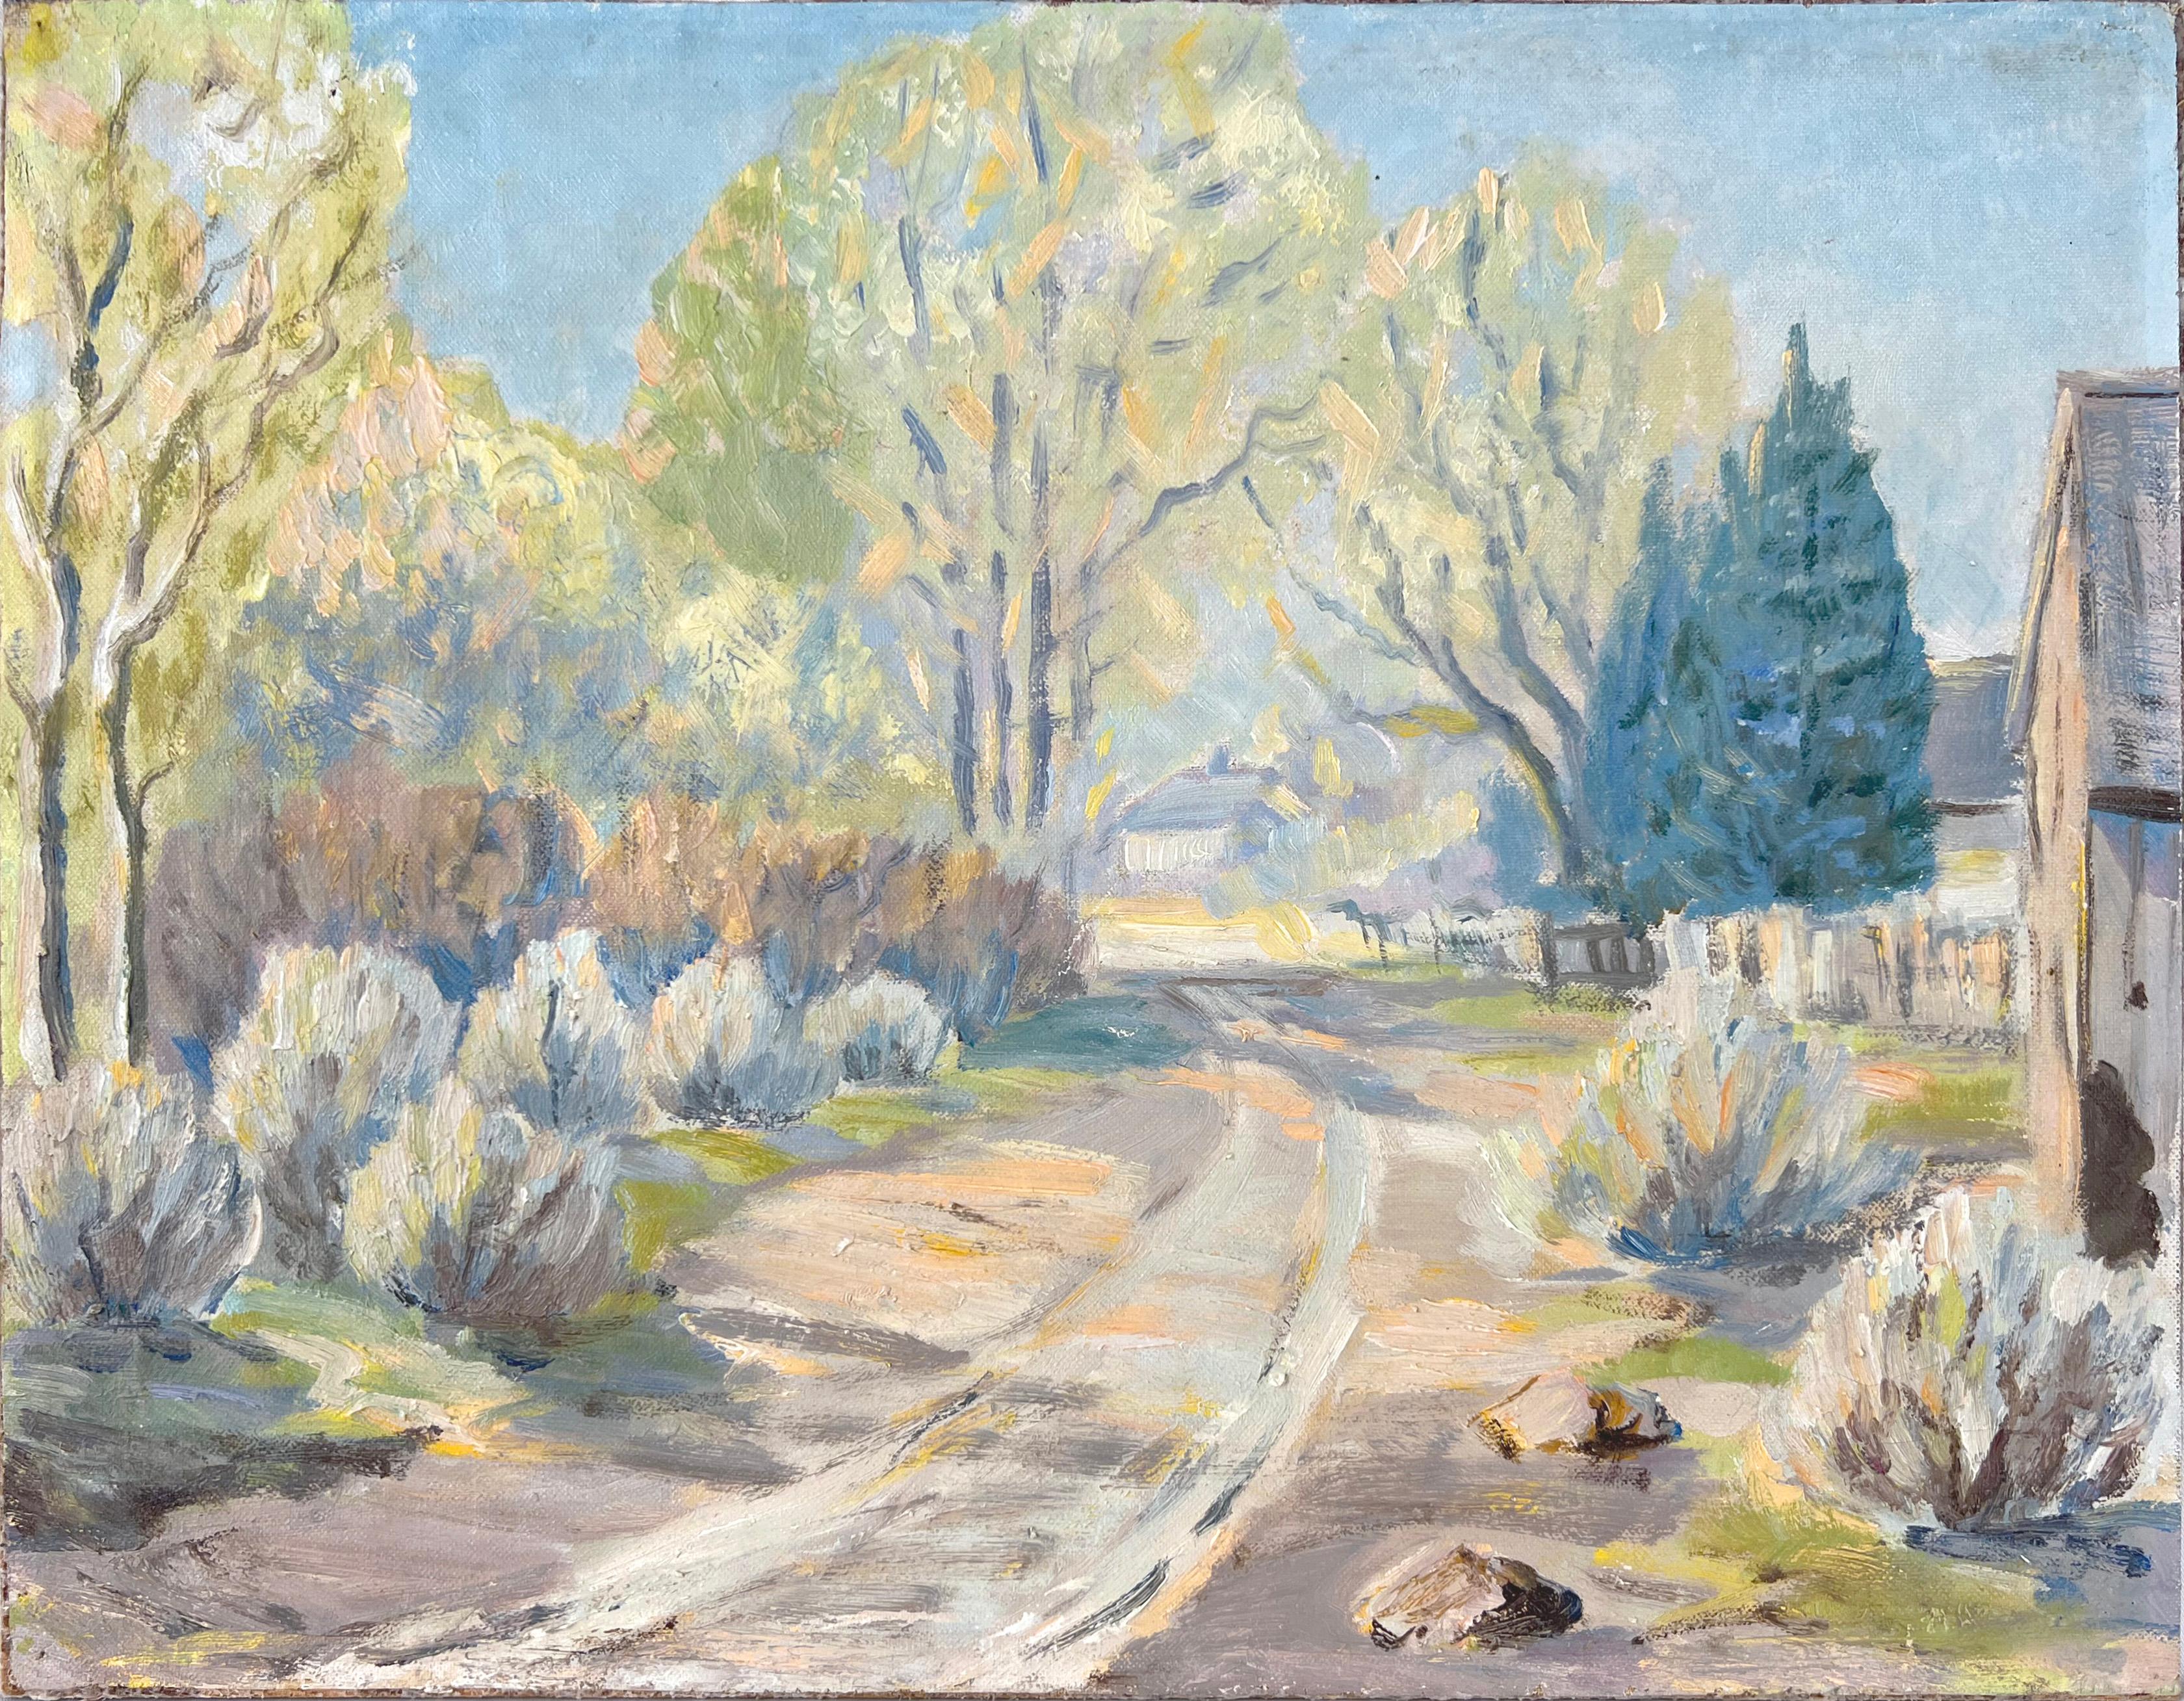 Unknown Landscape Painting - California School - Desert Ranch Road Landscape Oil on Canvas